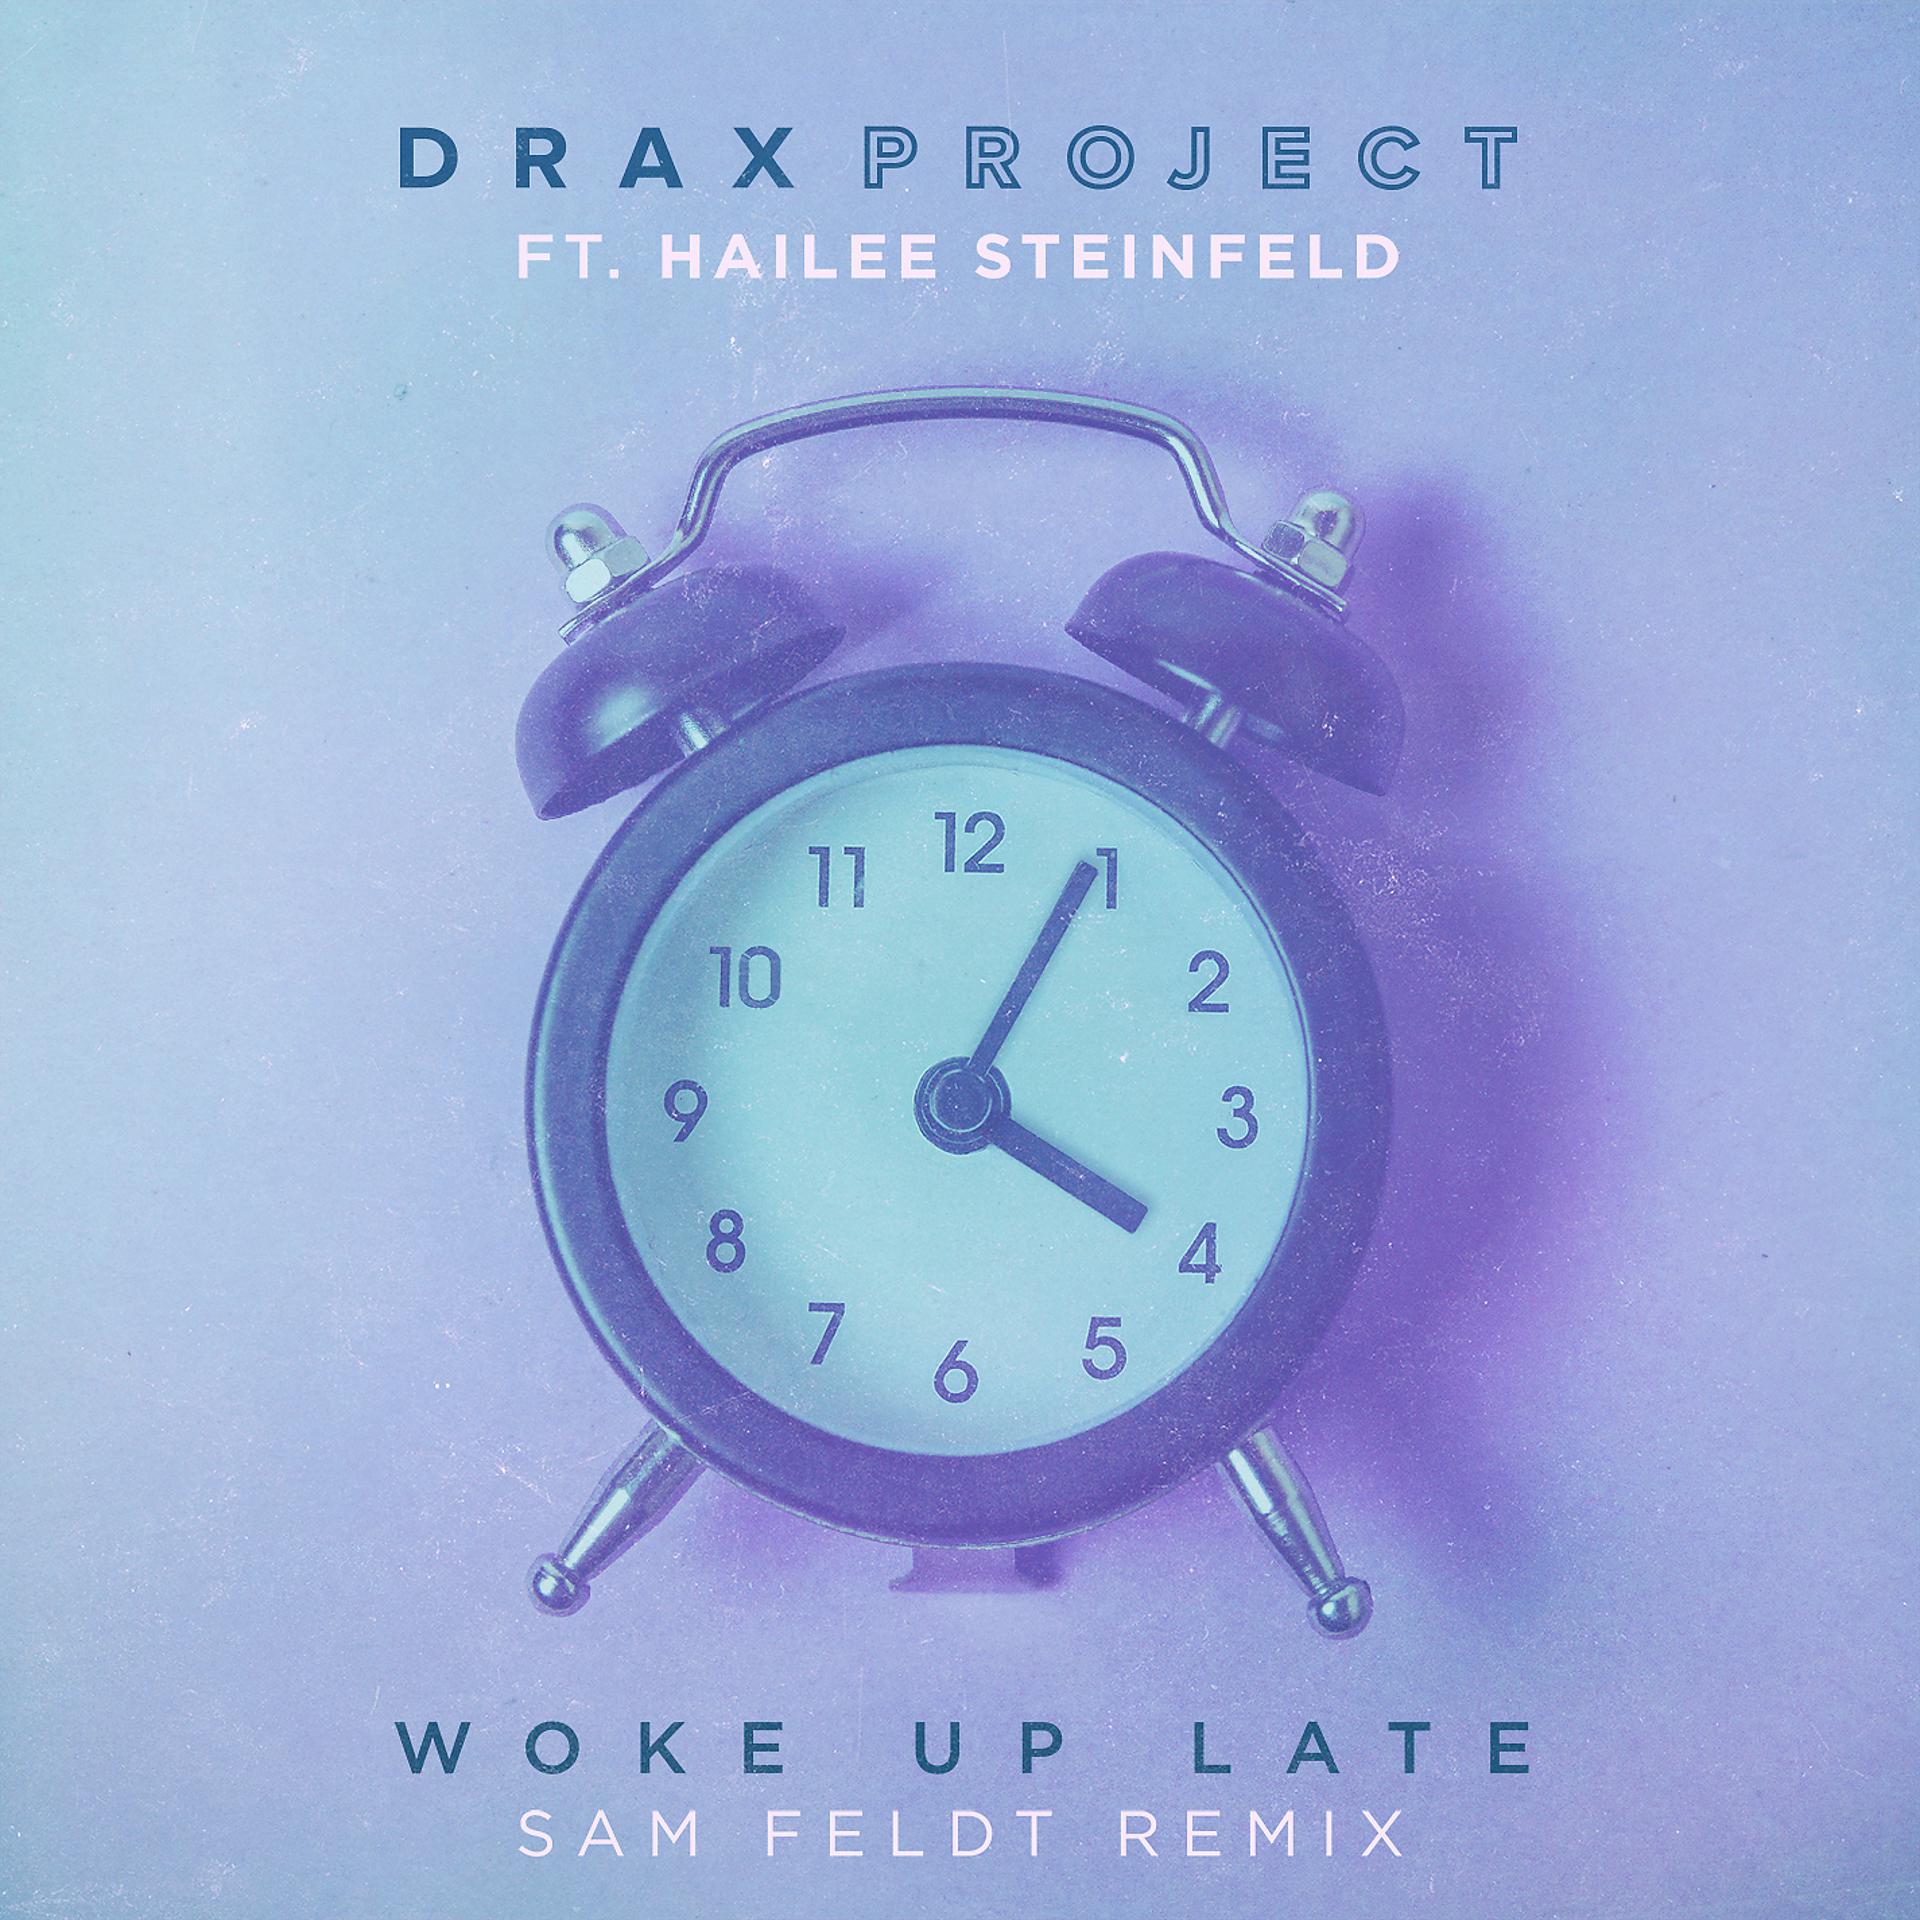 Drax Project - Woke up late ft. Hailee Steinfeld. Проект Wake up. Wake up late. Музыкальные обложки альбомов Hailee Steinfeld. Woke up yesterday